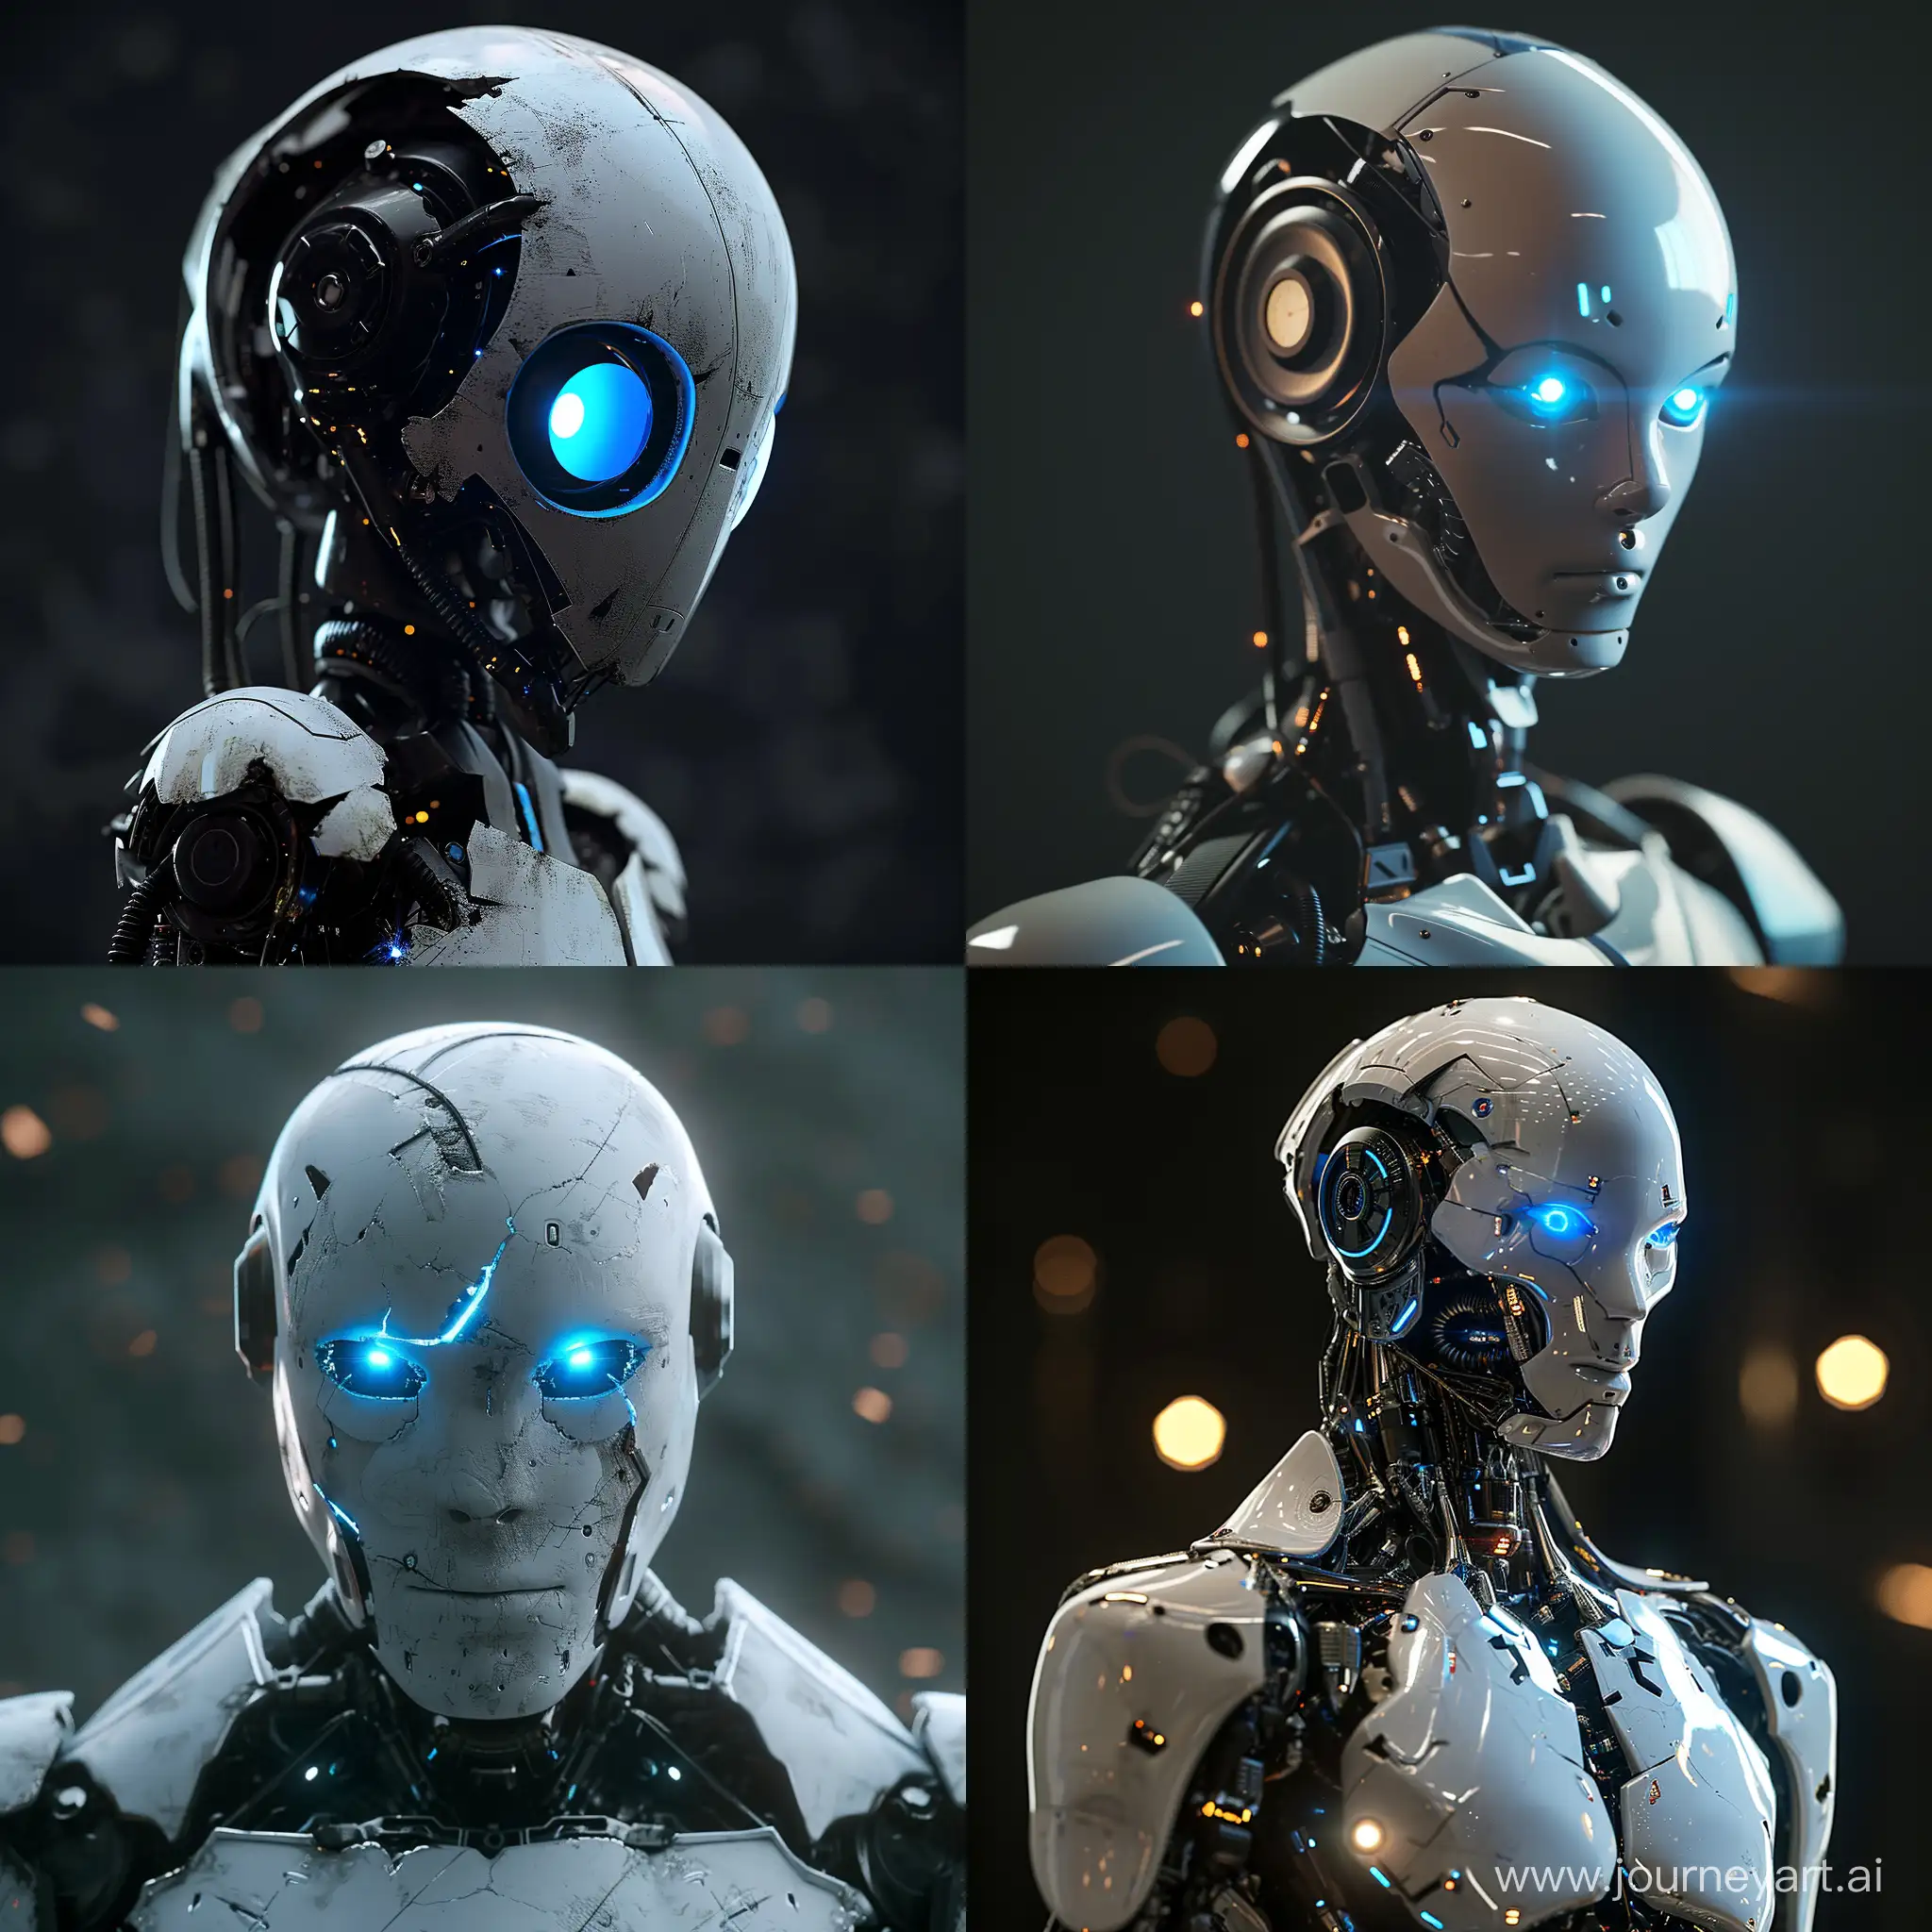 Glowing-BlueEyed-Broken-Robot-in-8K-Resolution